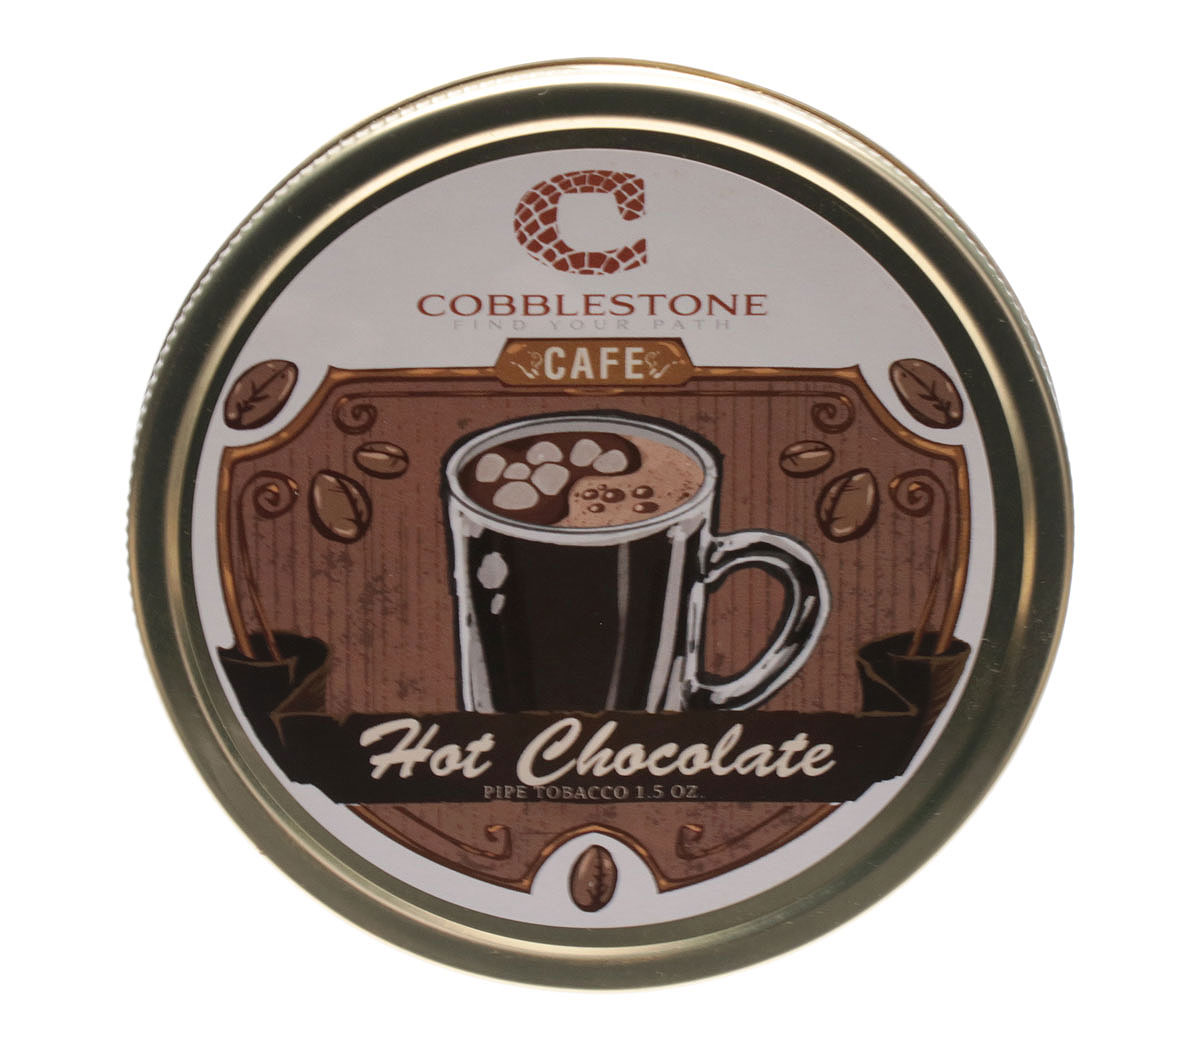 Cobblestone Cafe Hot Chocolate 1.5oz